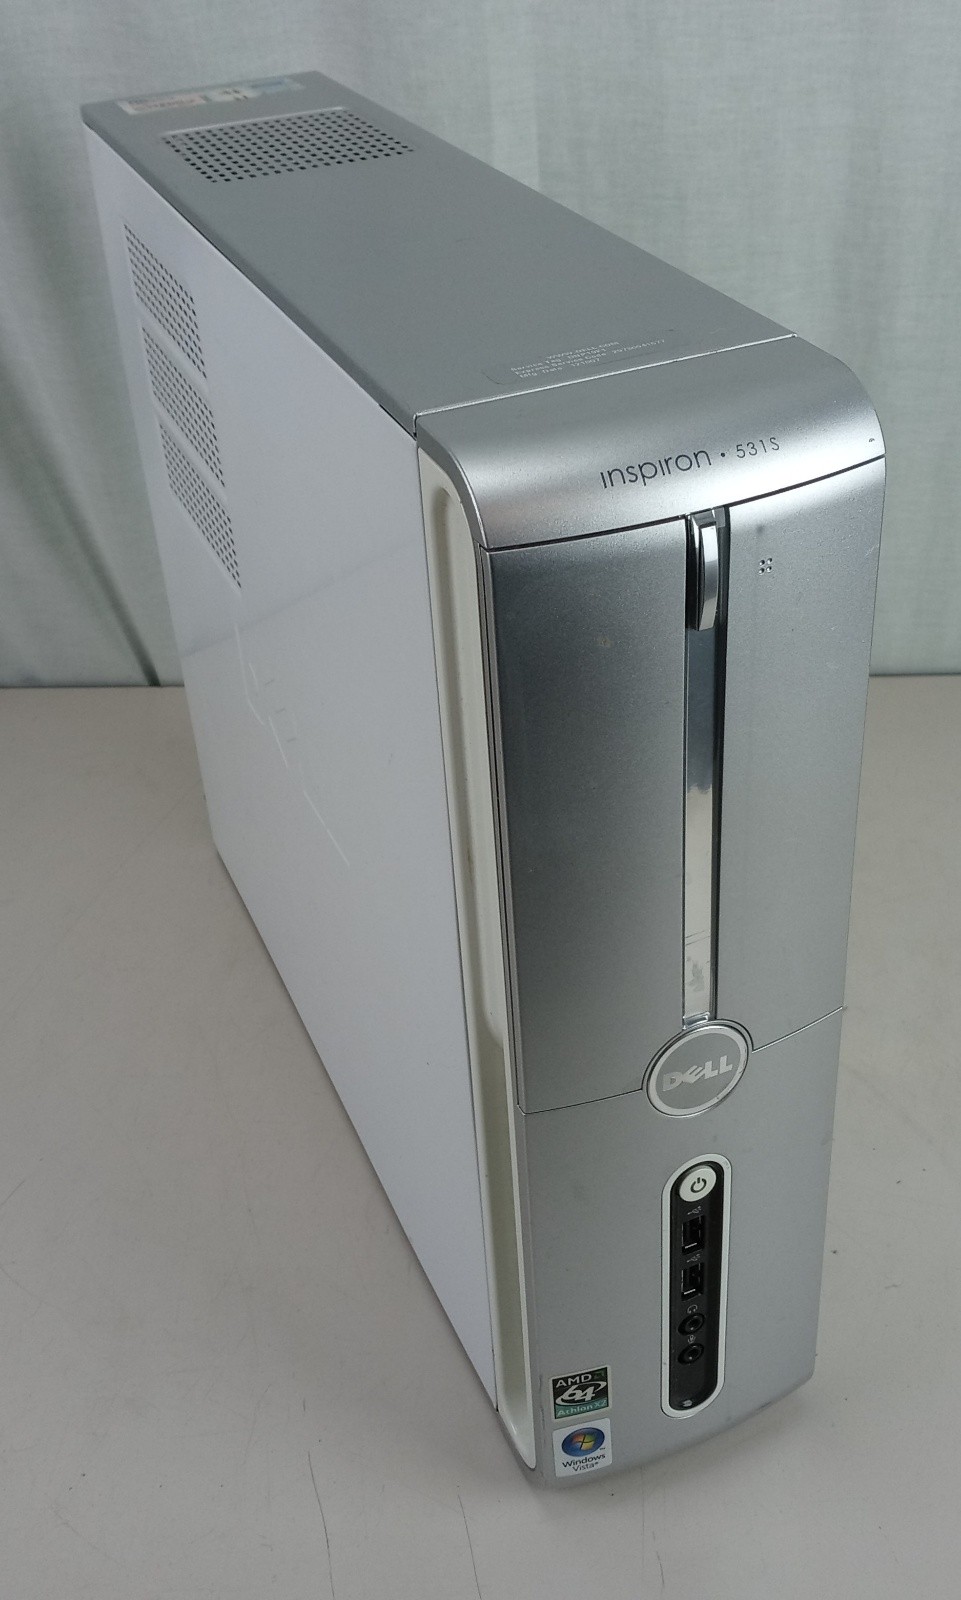 Dell Inspiron 531s Slim Desktop Athlon x2 4000+ 2.1GHz 2Gb 320Gb No OS 